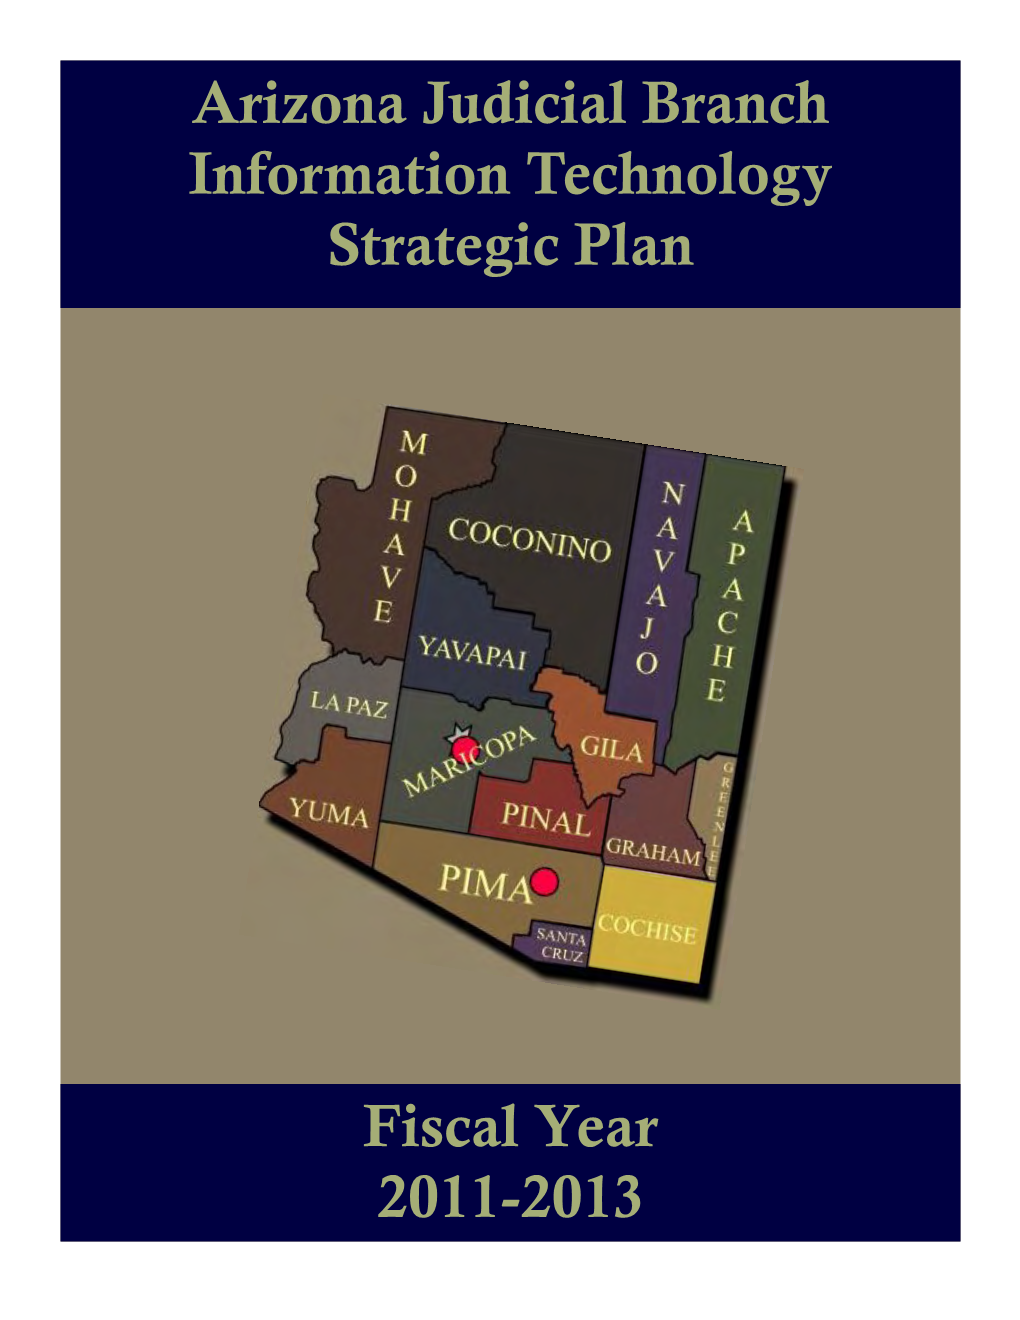 Arizona Judicial Branch Information Technology Strategic Plan Fiscal Year 2011-2013